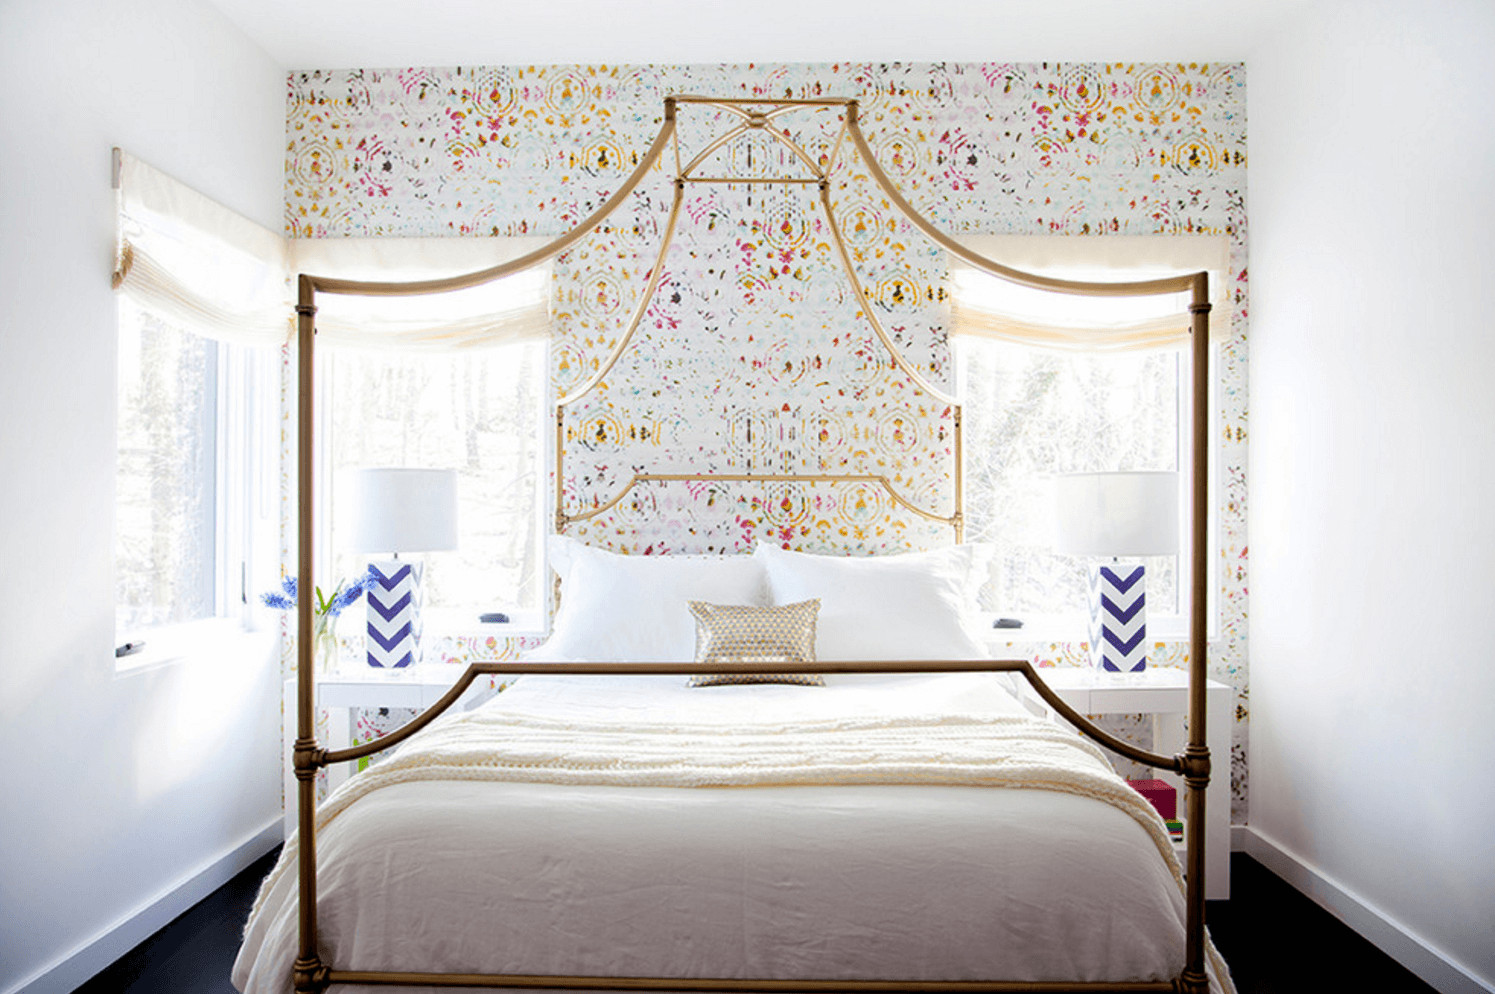 Solar System Bedroom Decor New 28 Stunning Wallpaper Ideas Your Home Needs